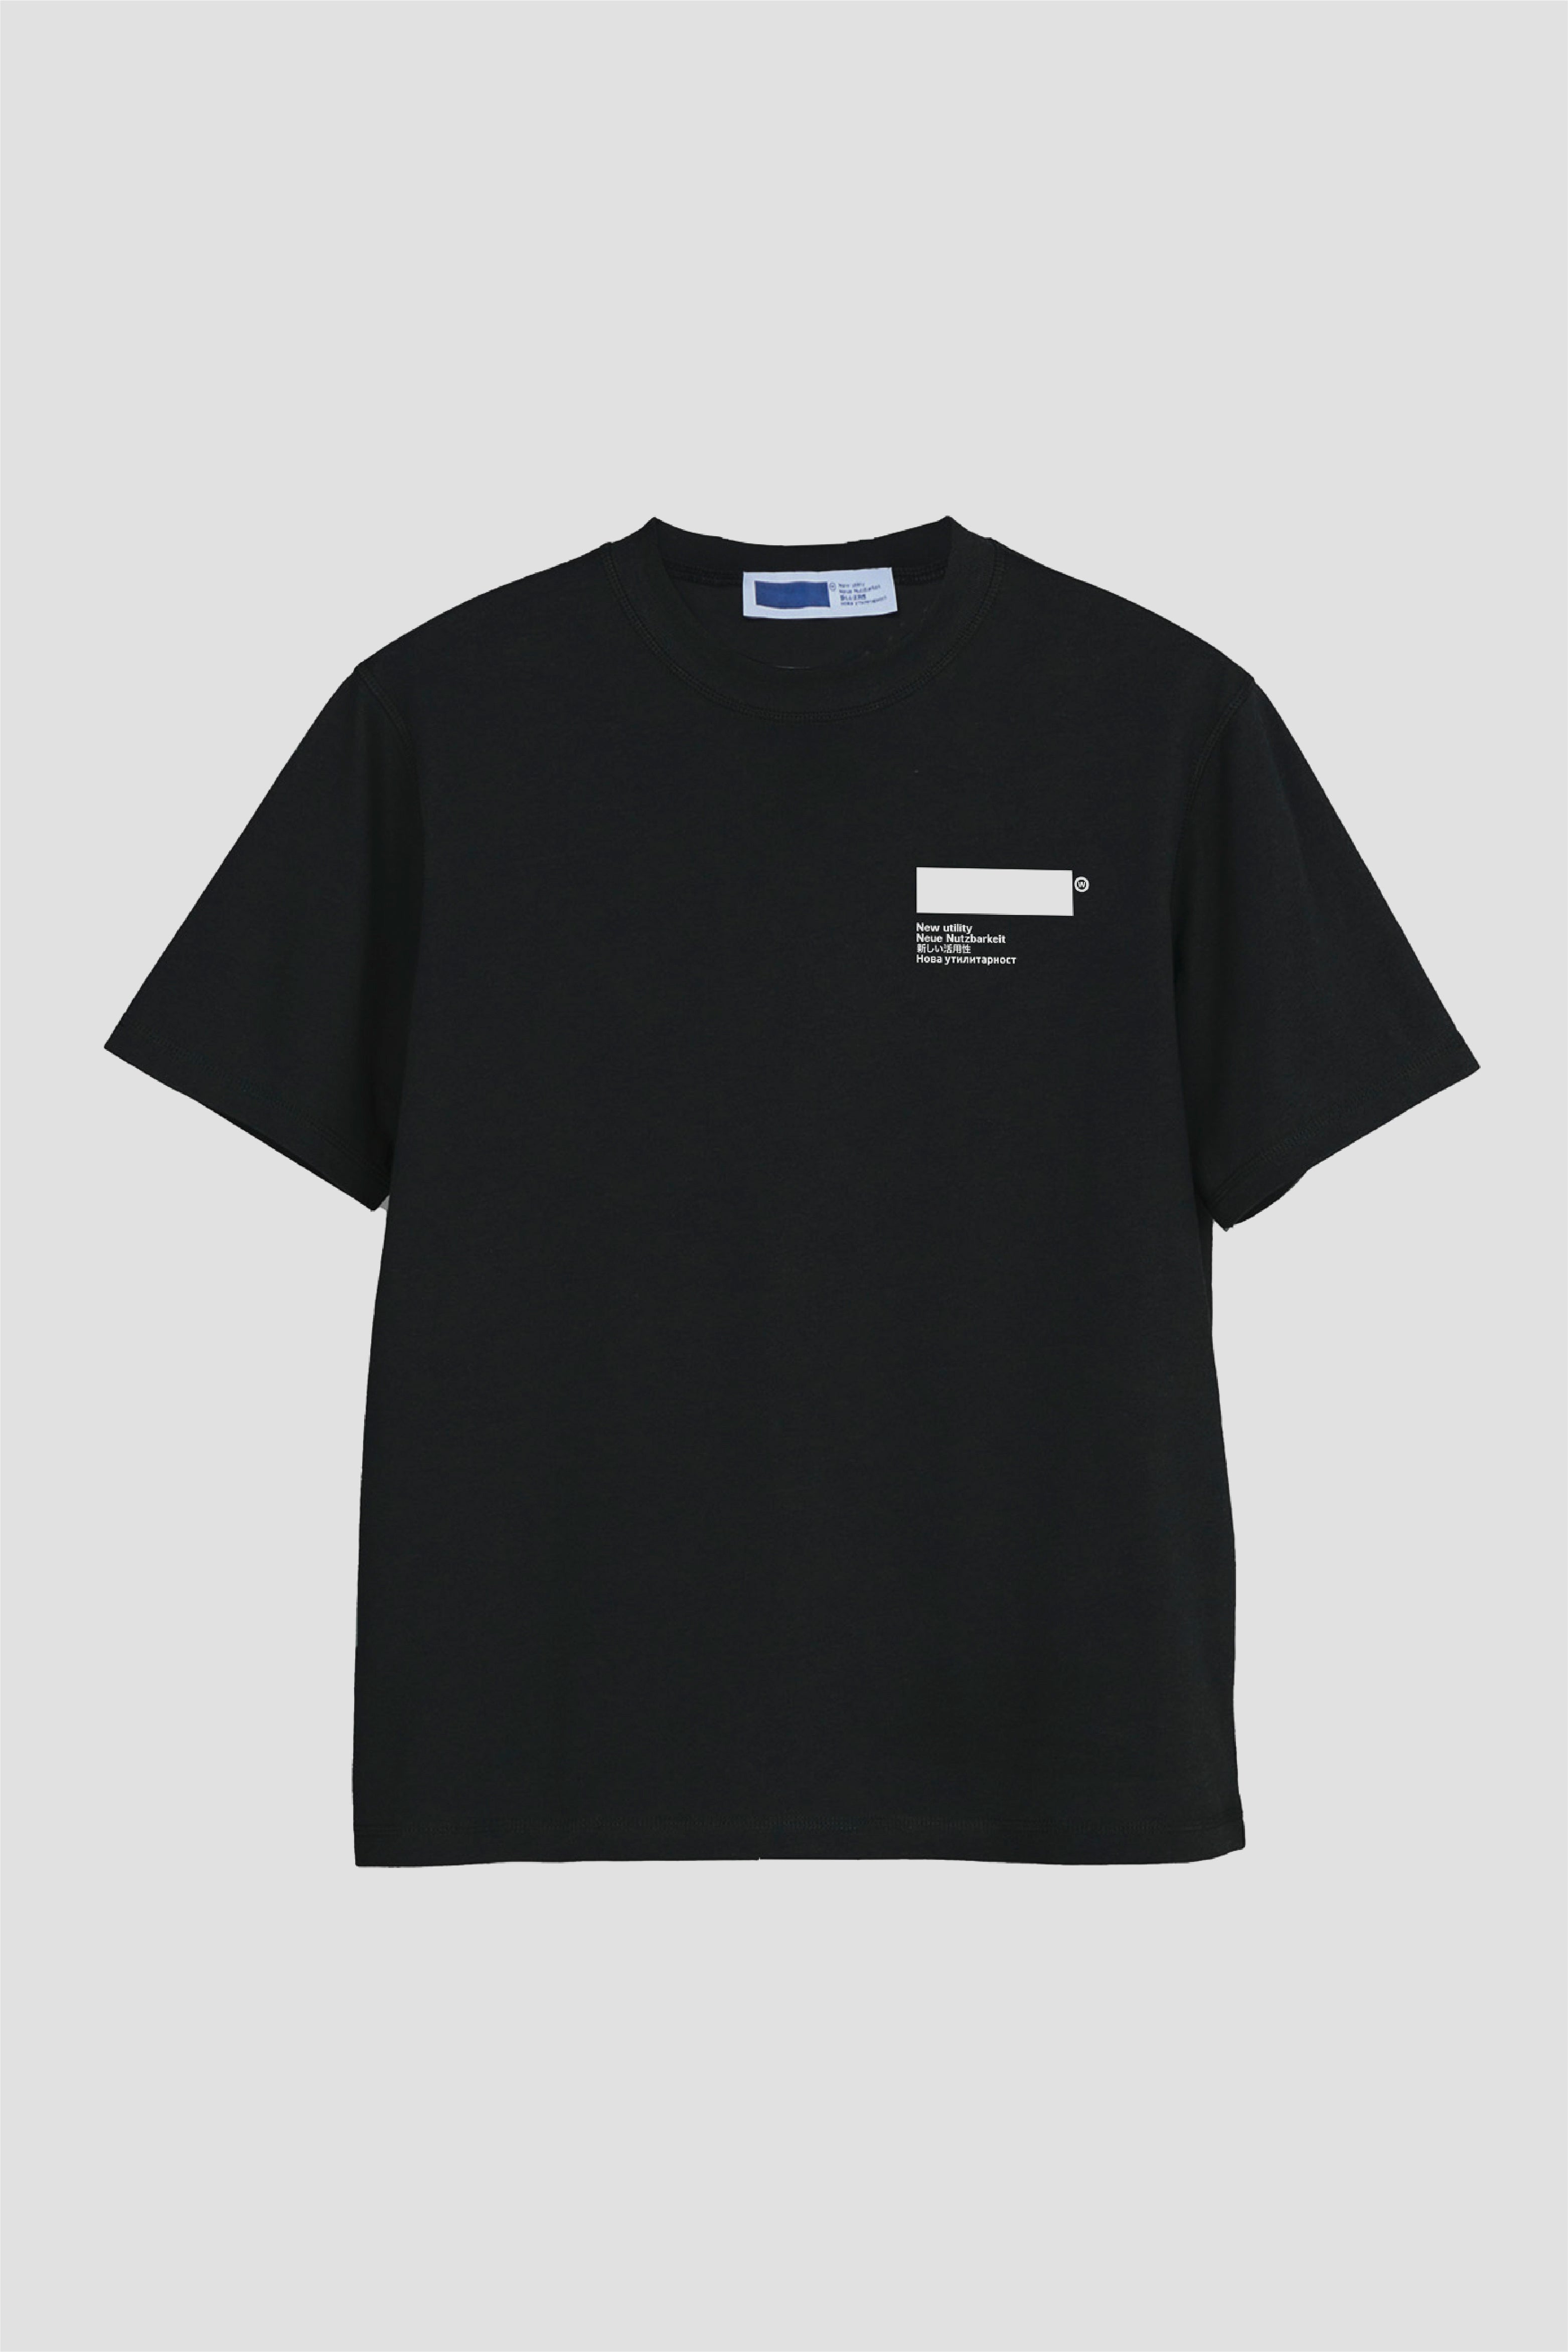 Selectshop FRAME - AFFXWRKS Standardised Tee T-Shirts Concept Store Dubai